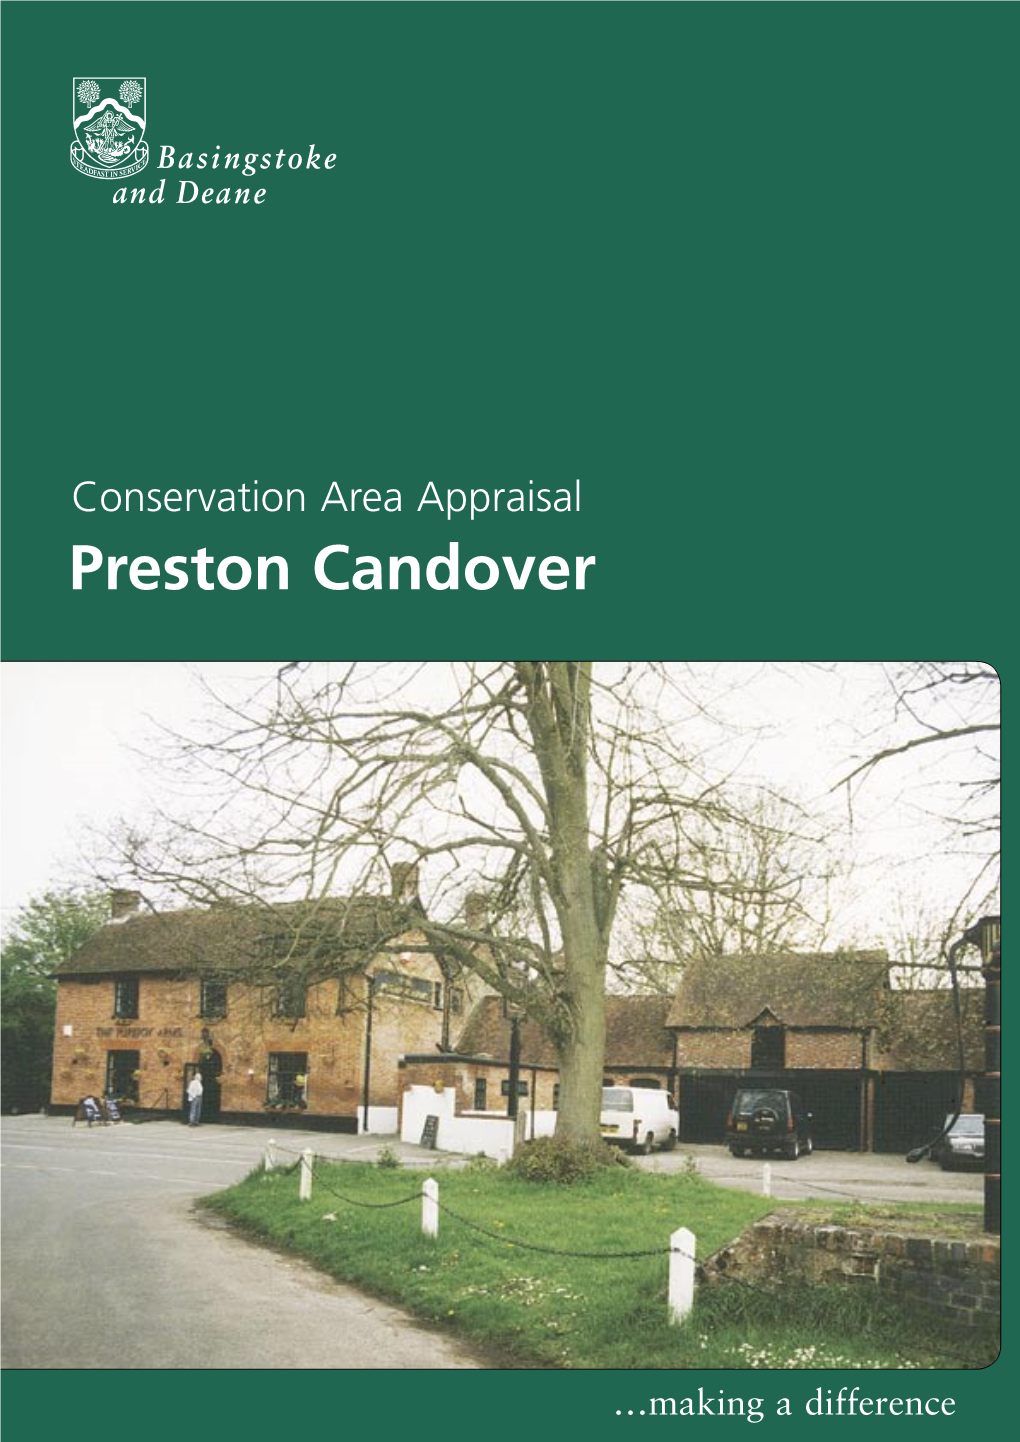 Preston Candover Conservation Area Appraisal